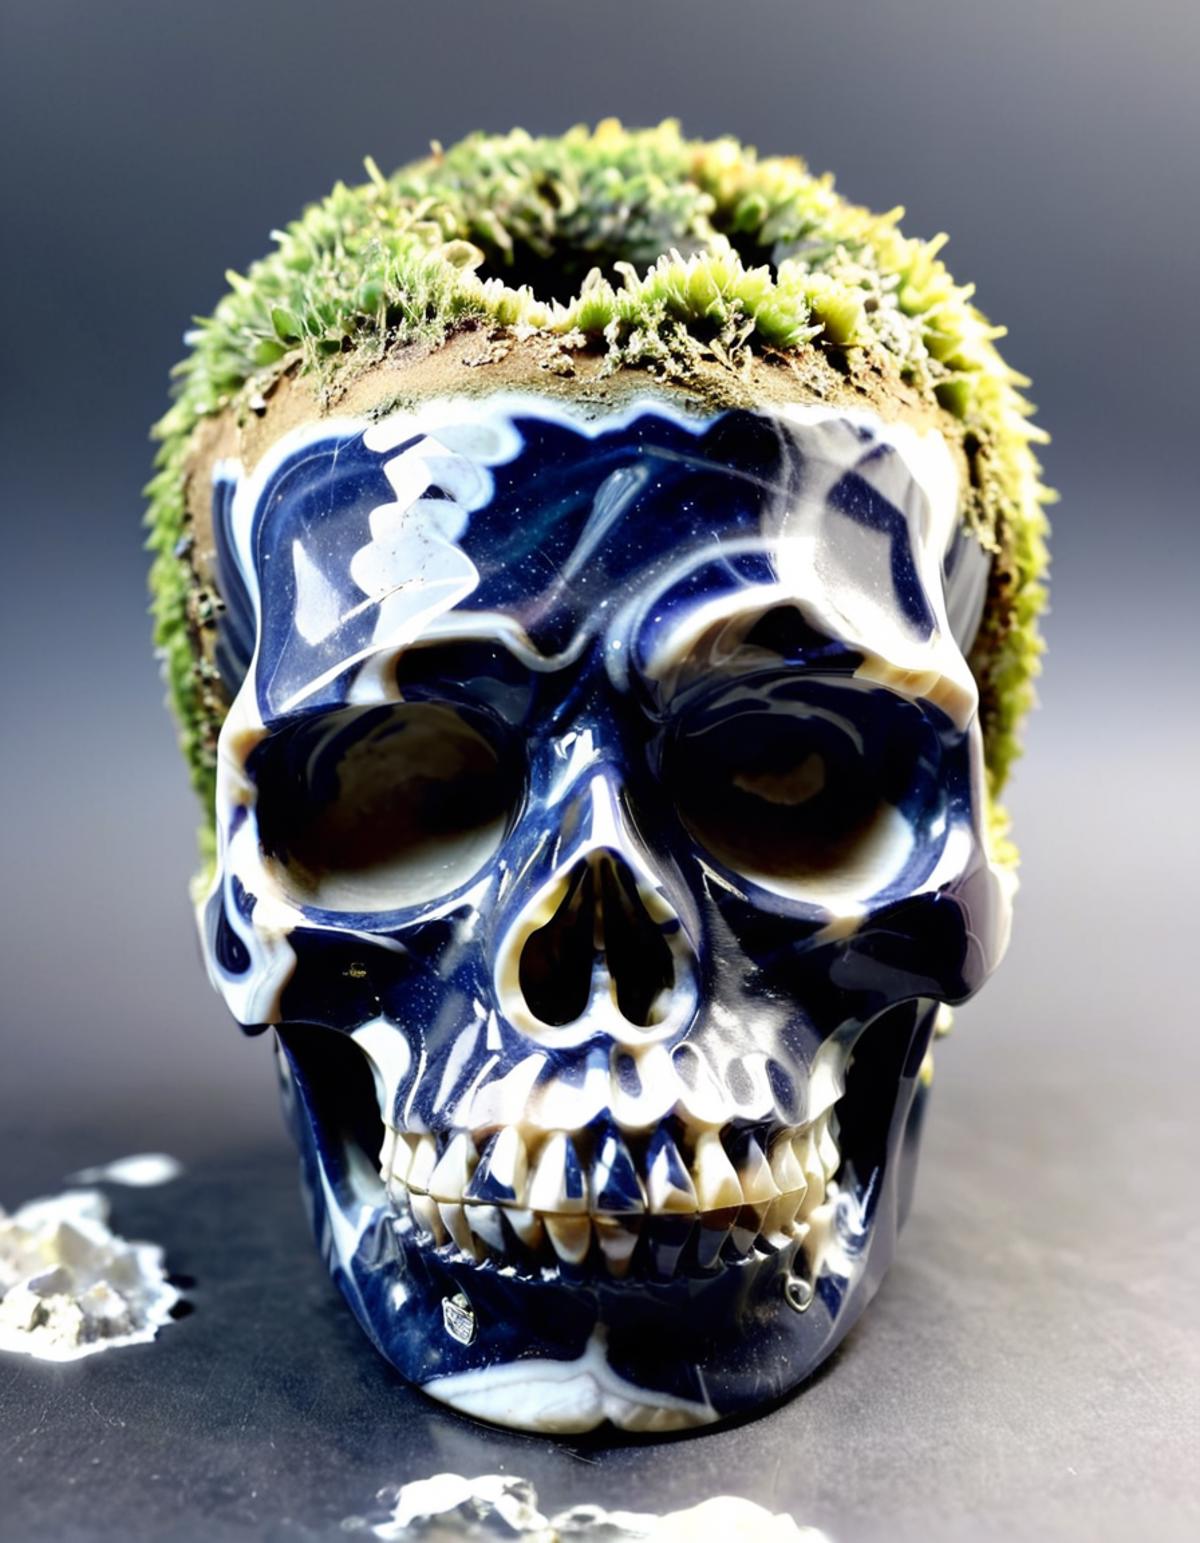 Crystal Skull XL image by ParanoidAmerican